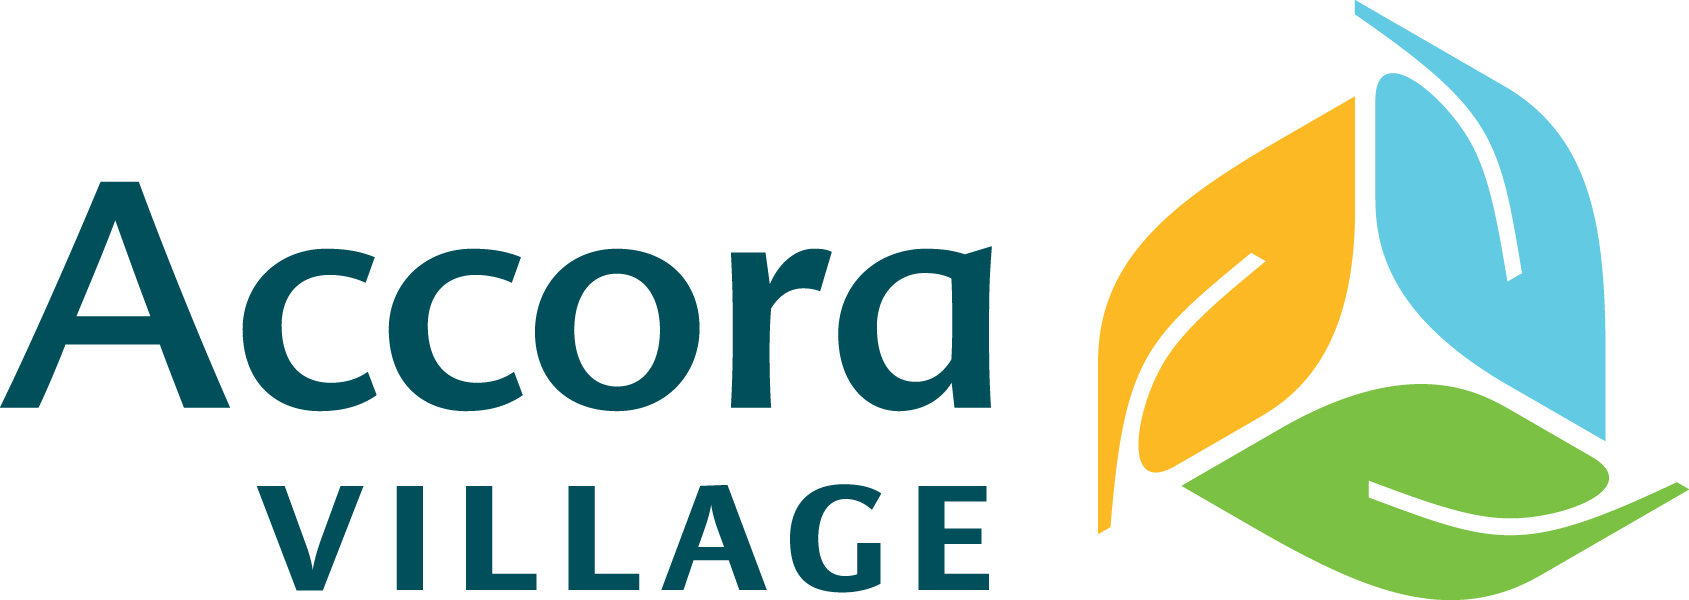 Accora Village Logo 300rgb 2